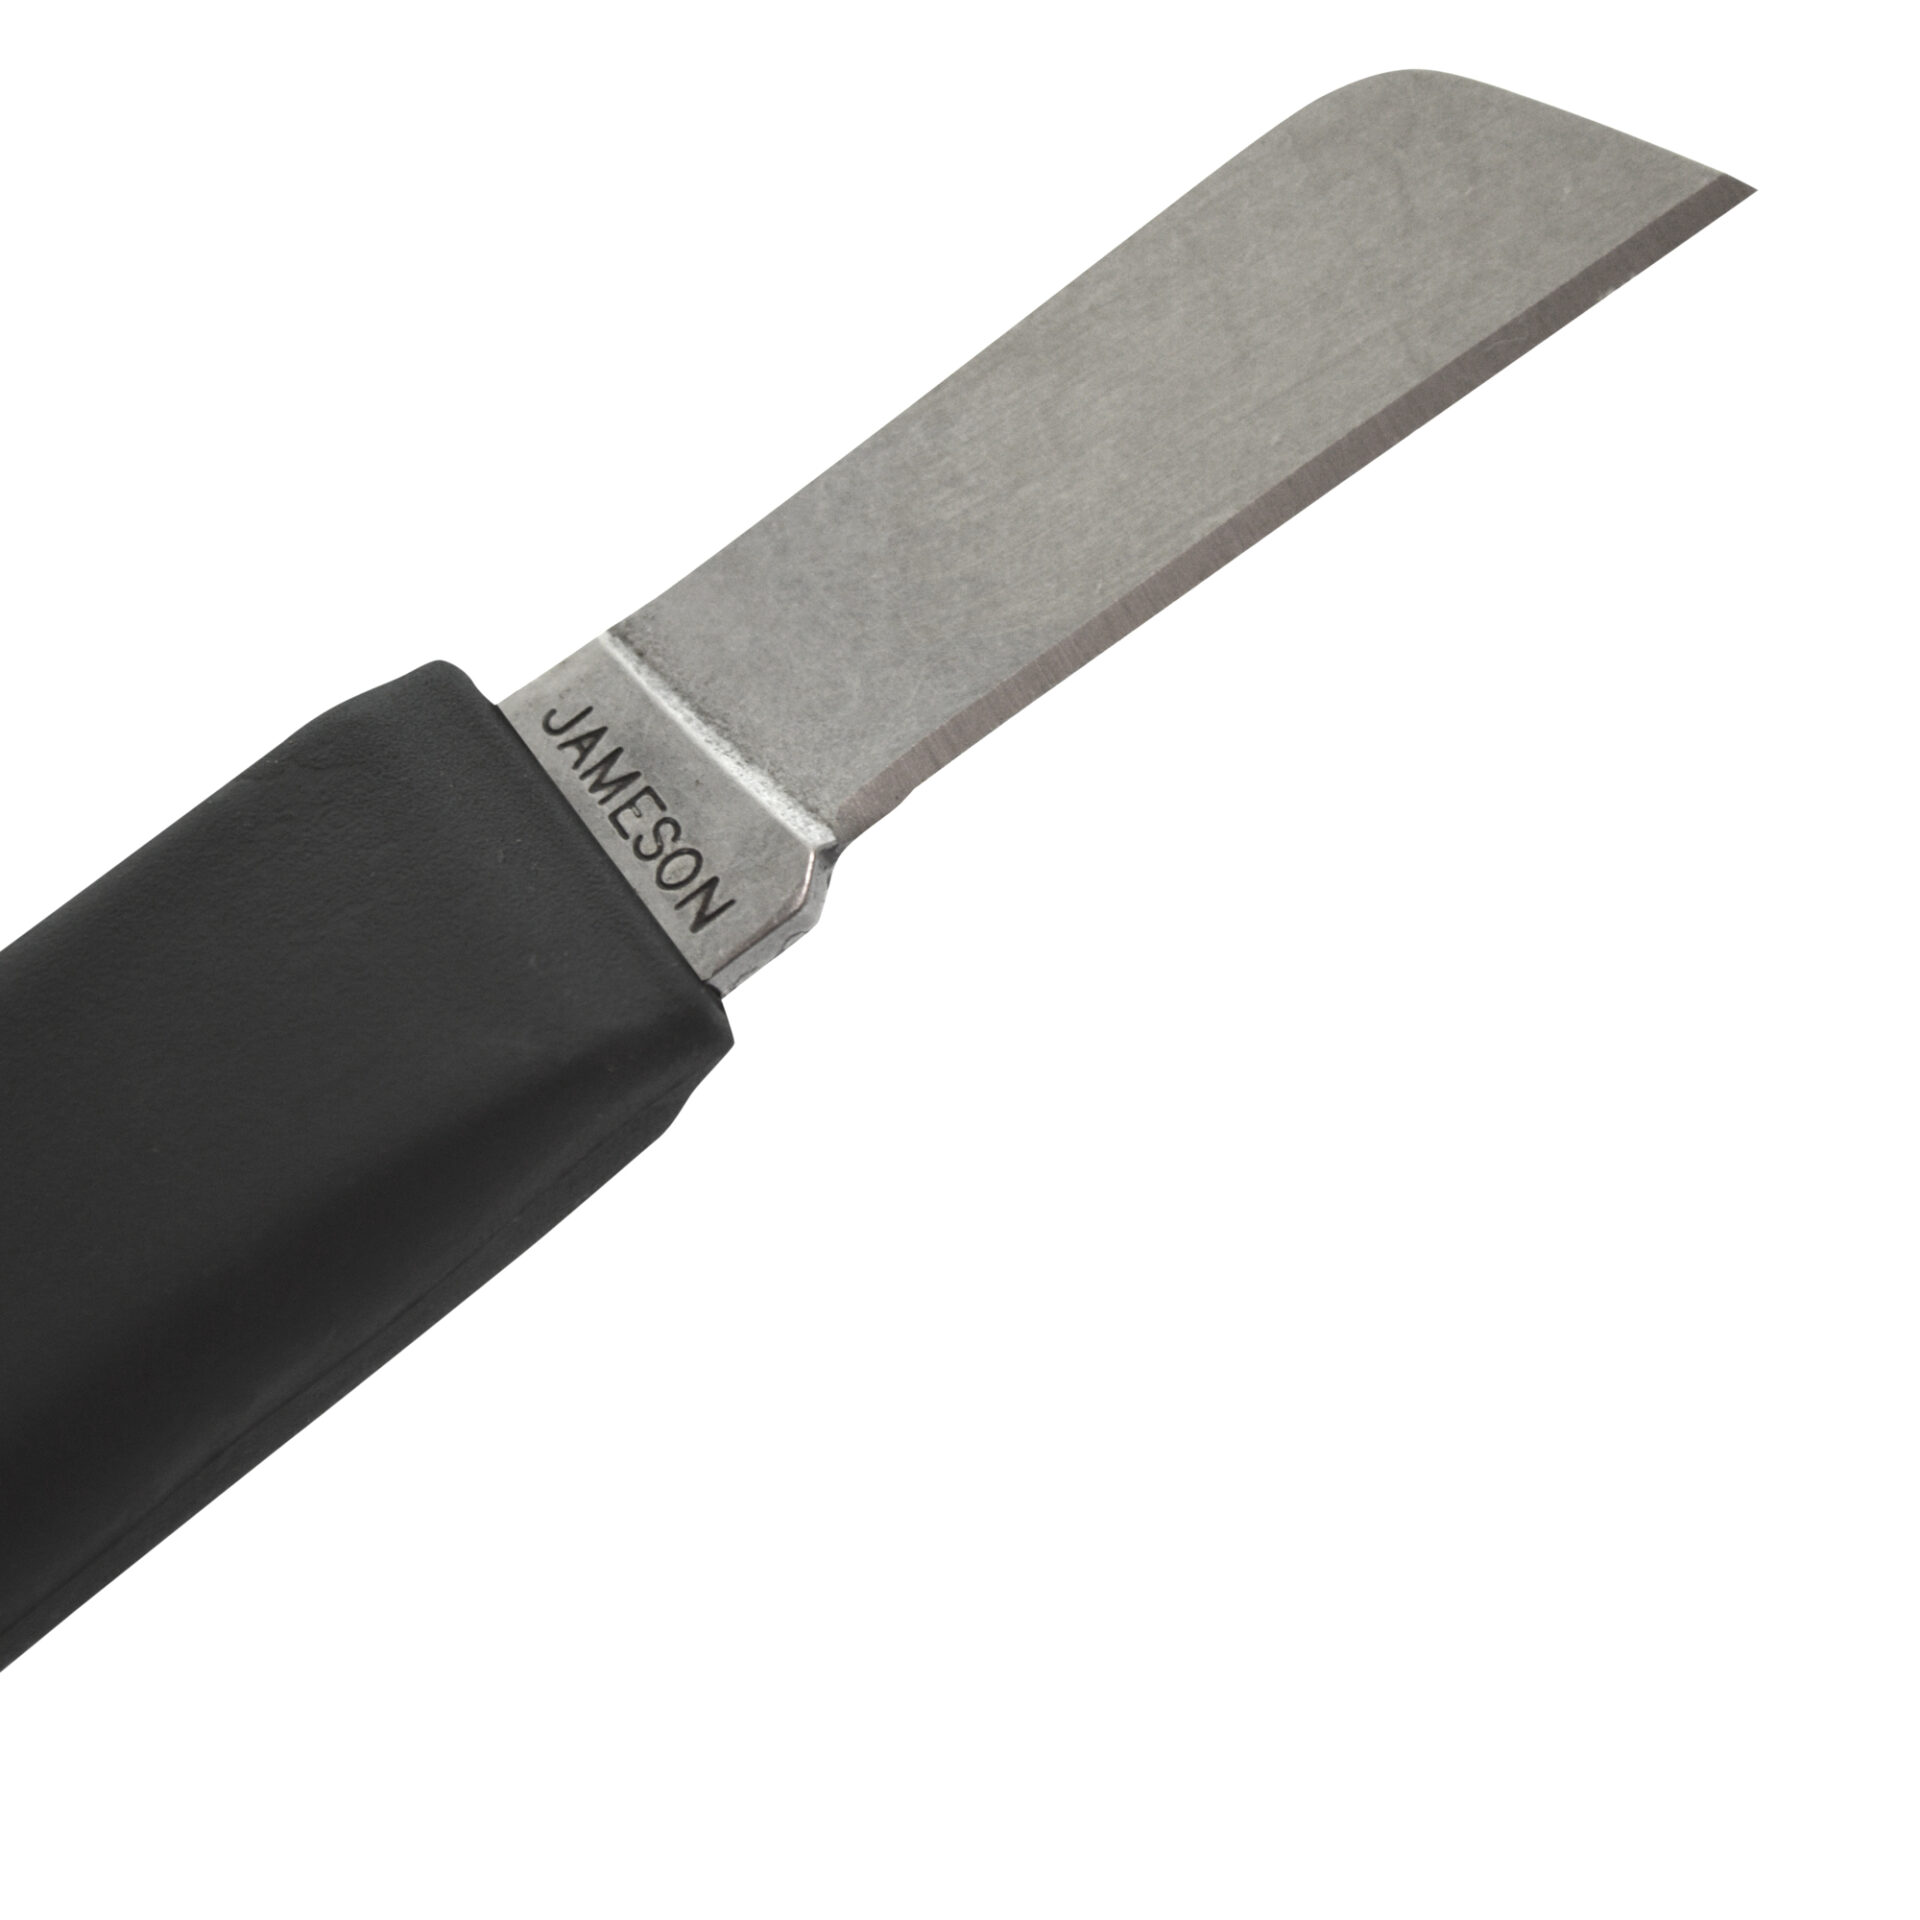 Jameson Knife and Scissors Sharpener 32-50 - The Home Depot